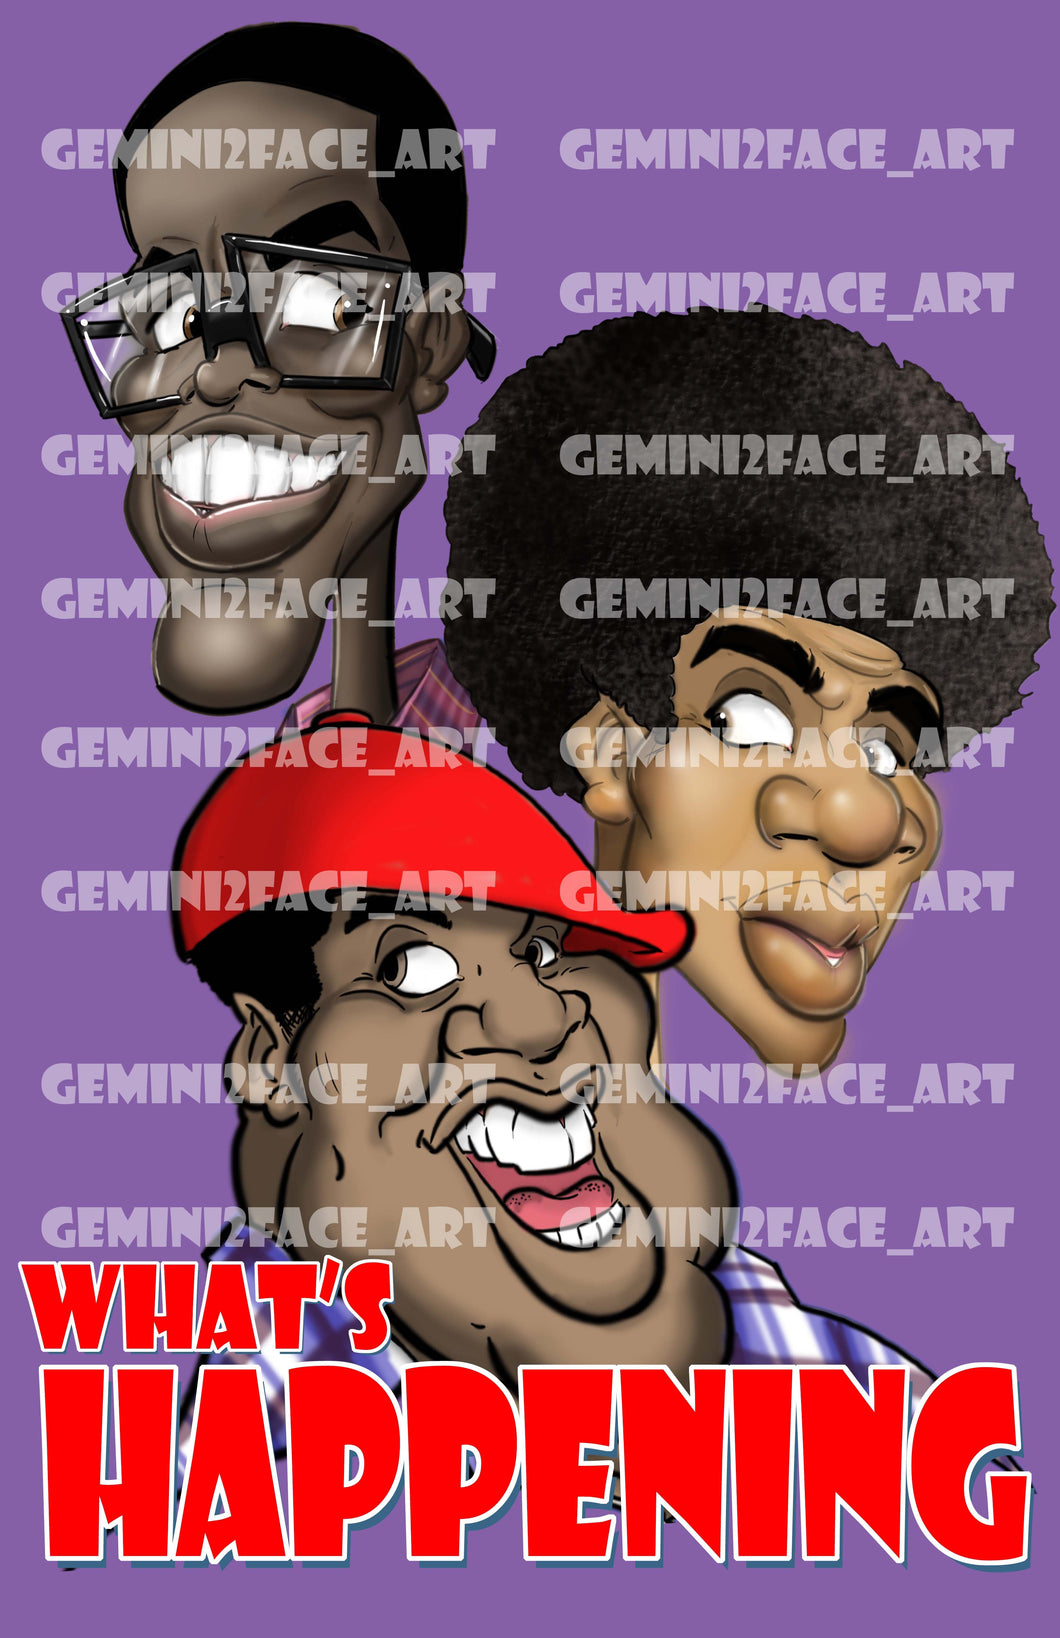 What's Happening PNG PNG File Gemini2face Art E-Store 